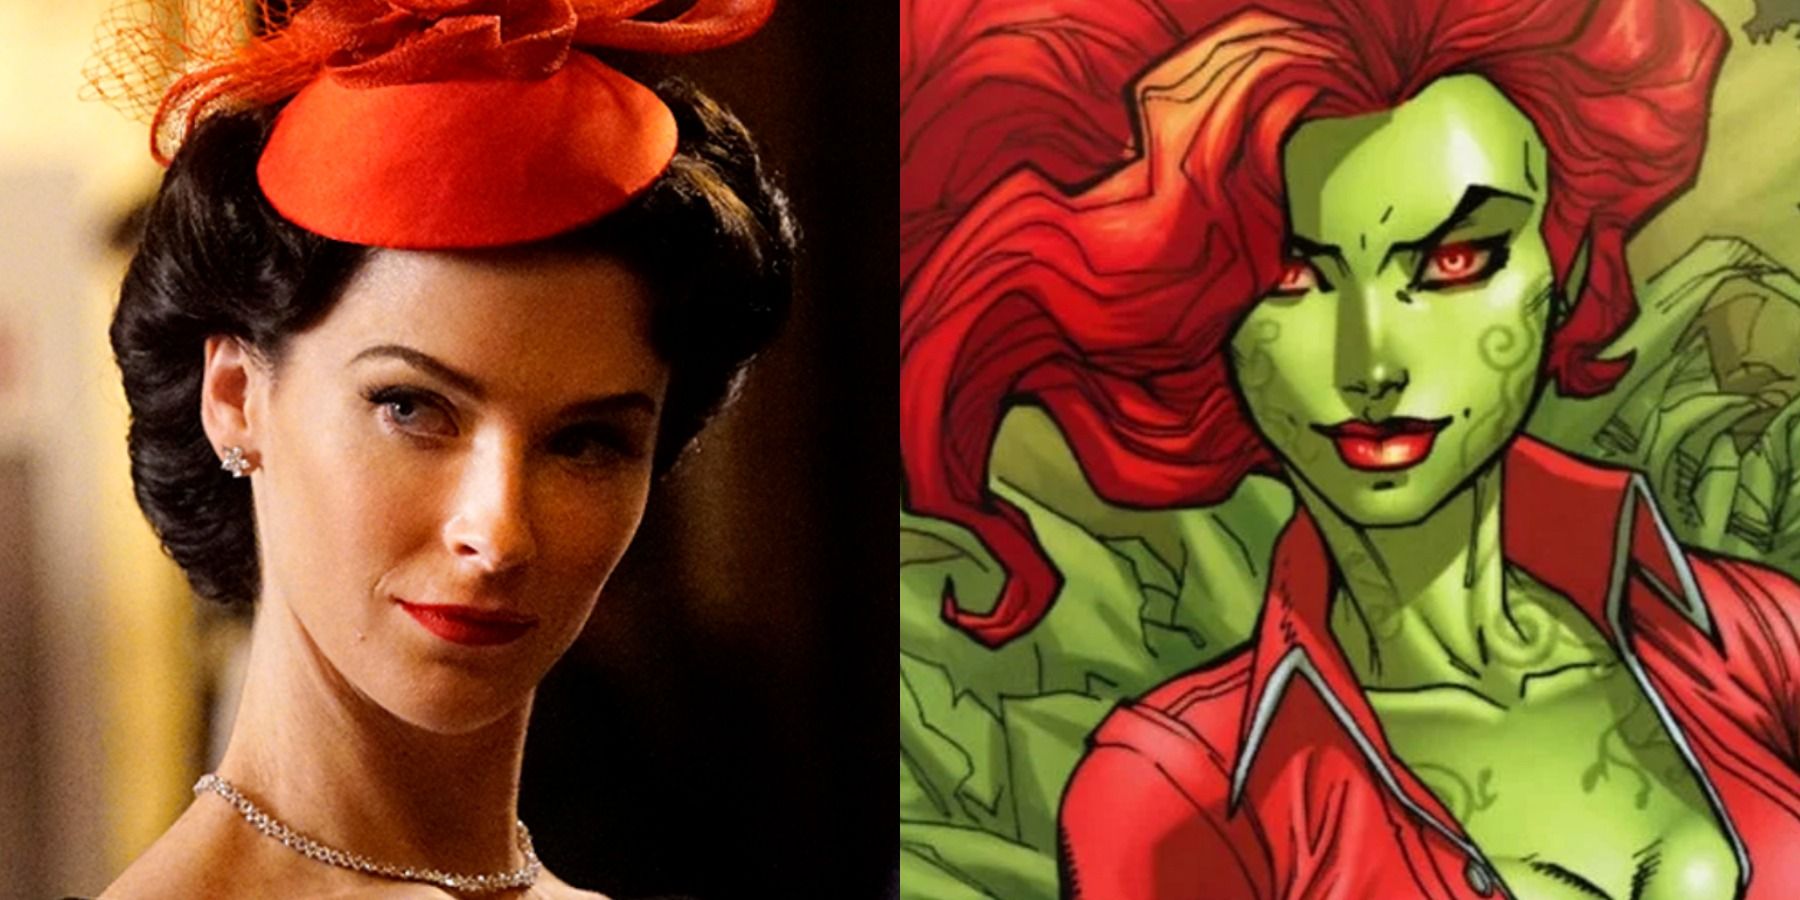 A split image depicts Bridget Regan as Dottie in Agent Carter and Poison Ivy in DC comics